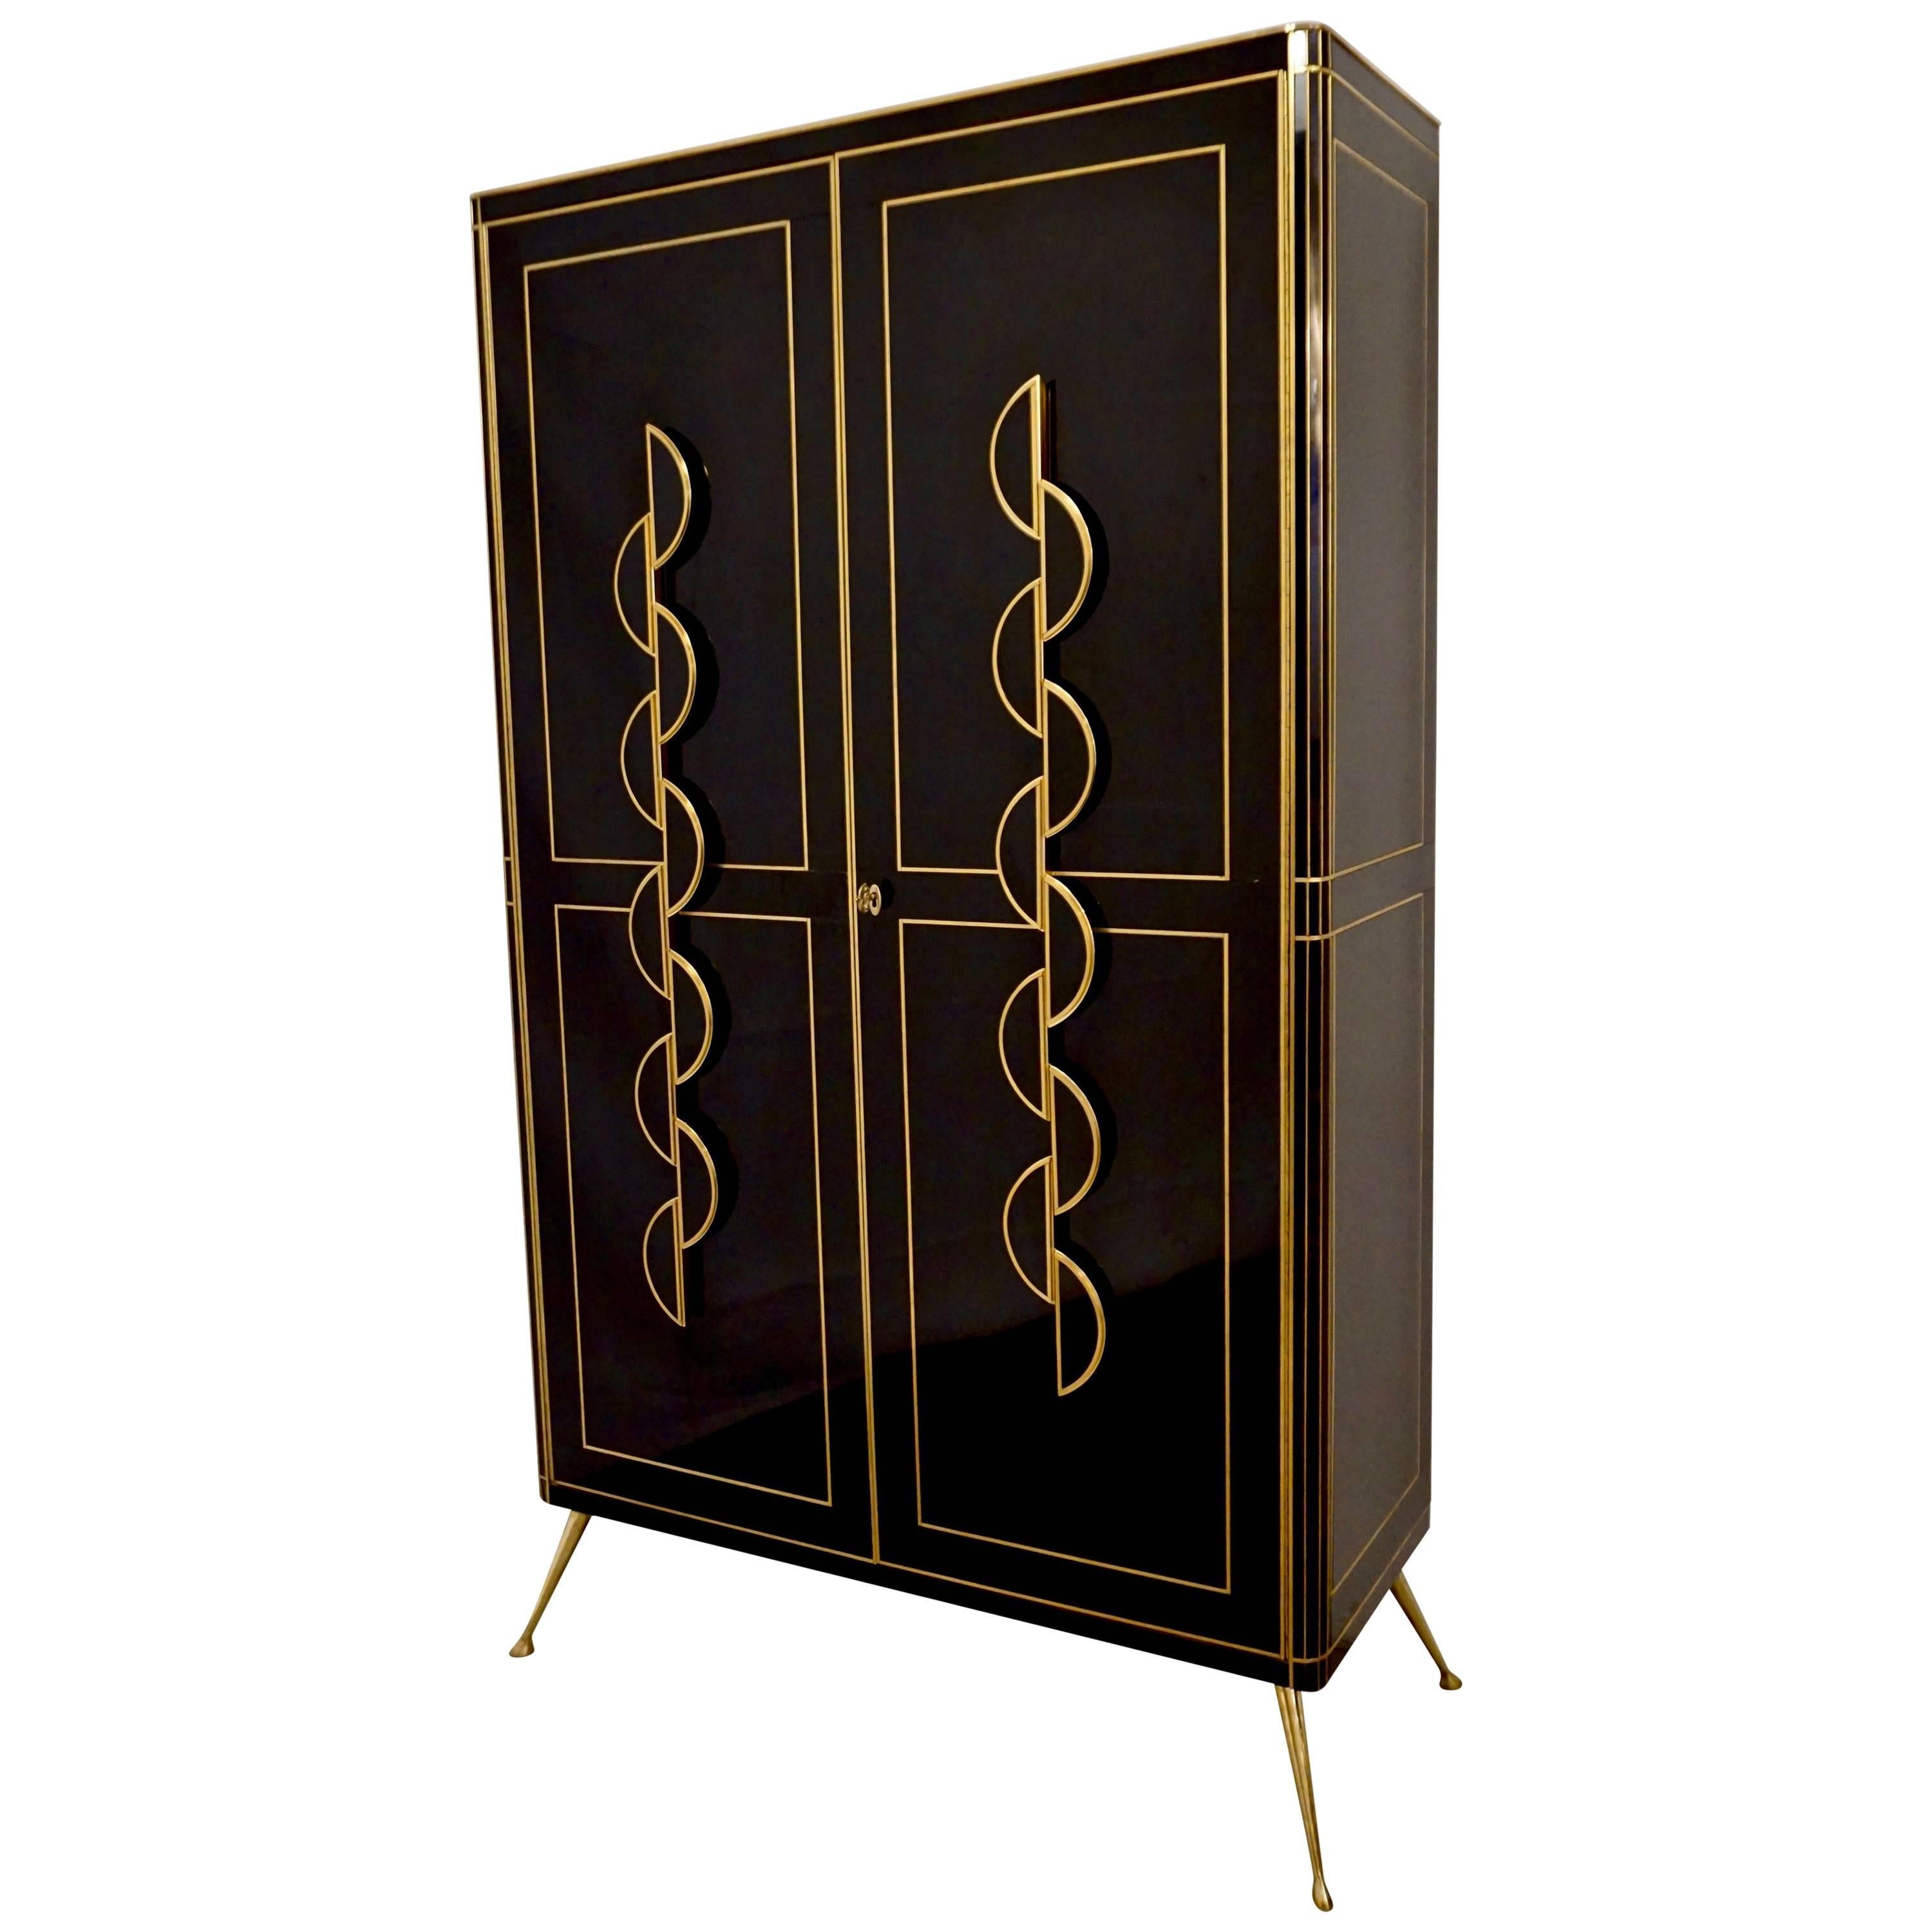 1970s Italian Art Deco Design Gold Brass and Black Glass Tall Cabinet / Bar